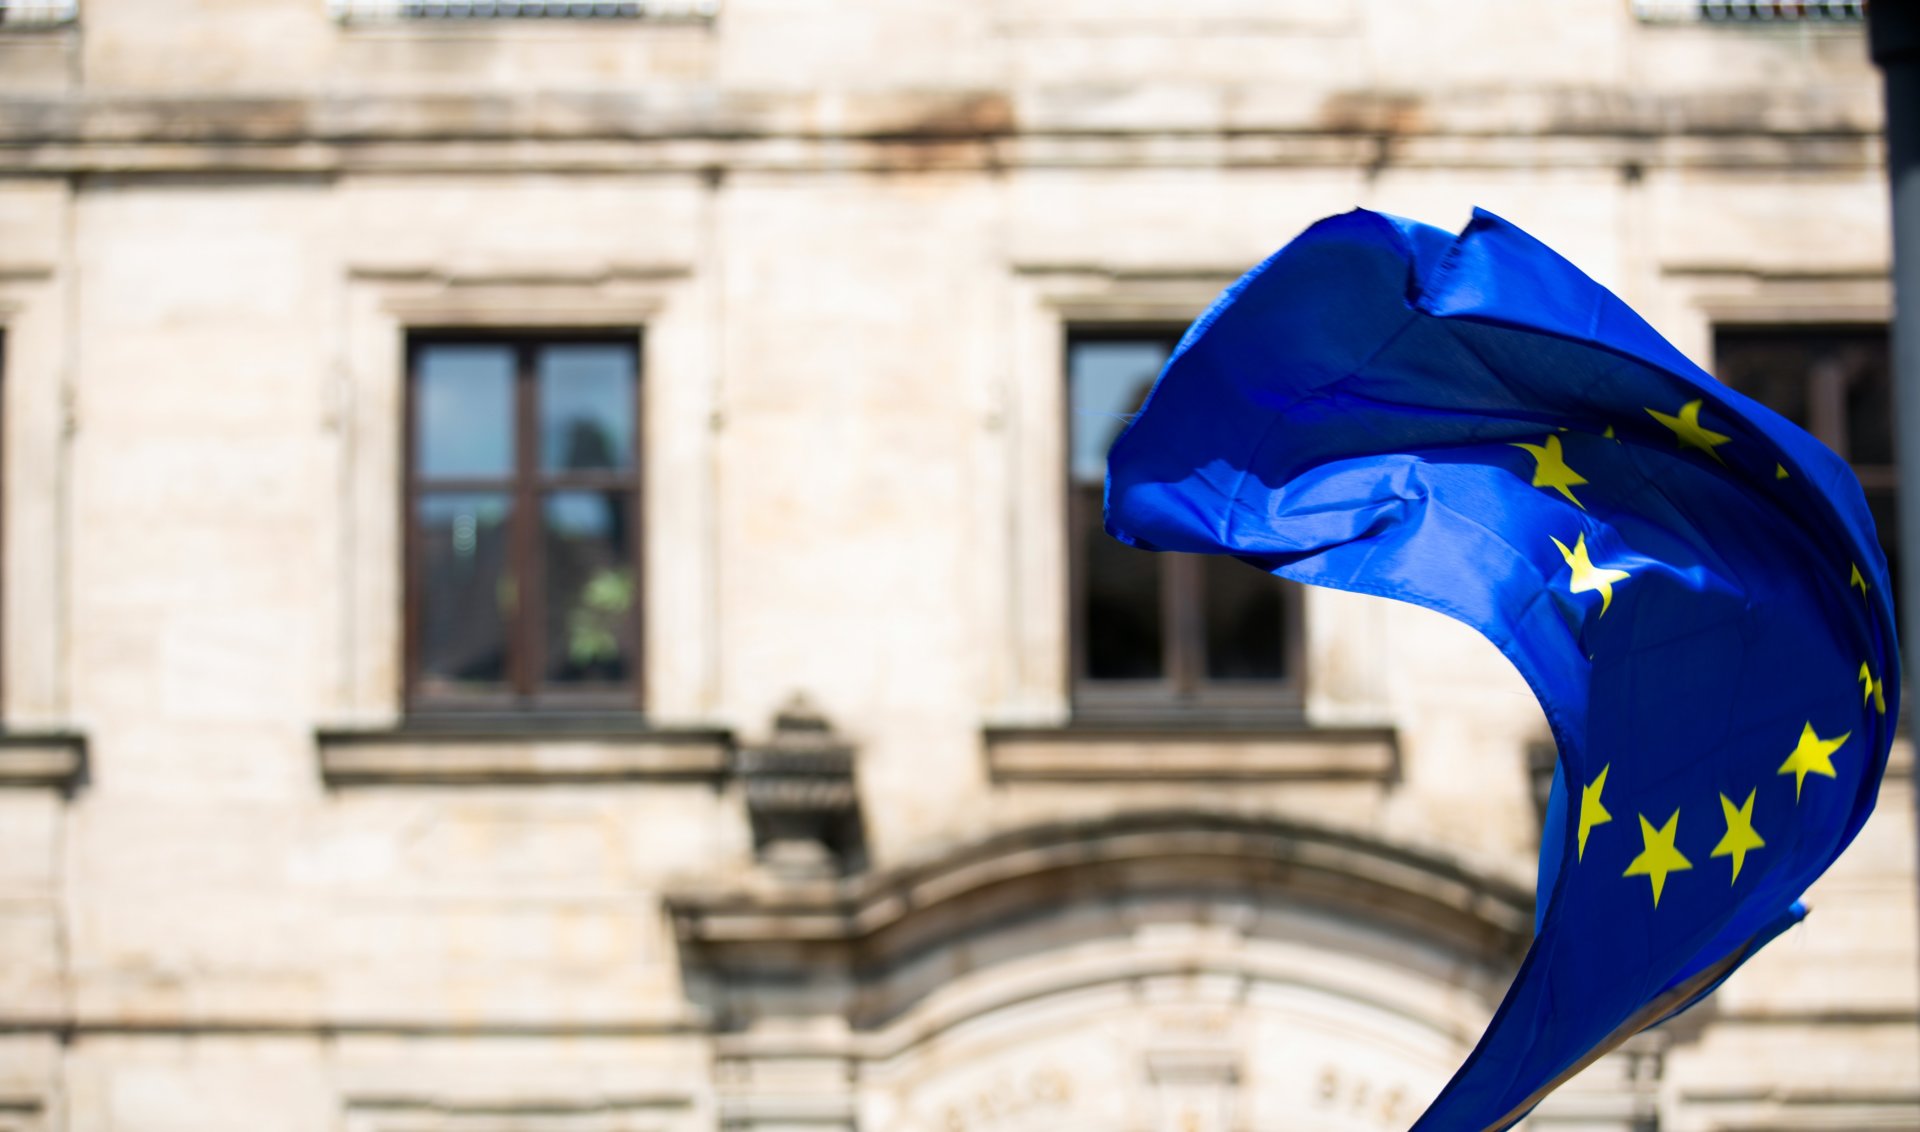 EU flag waving behind a stone building